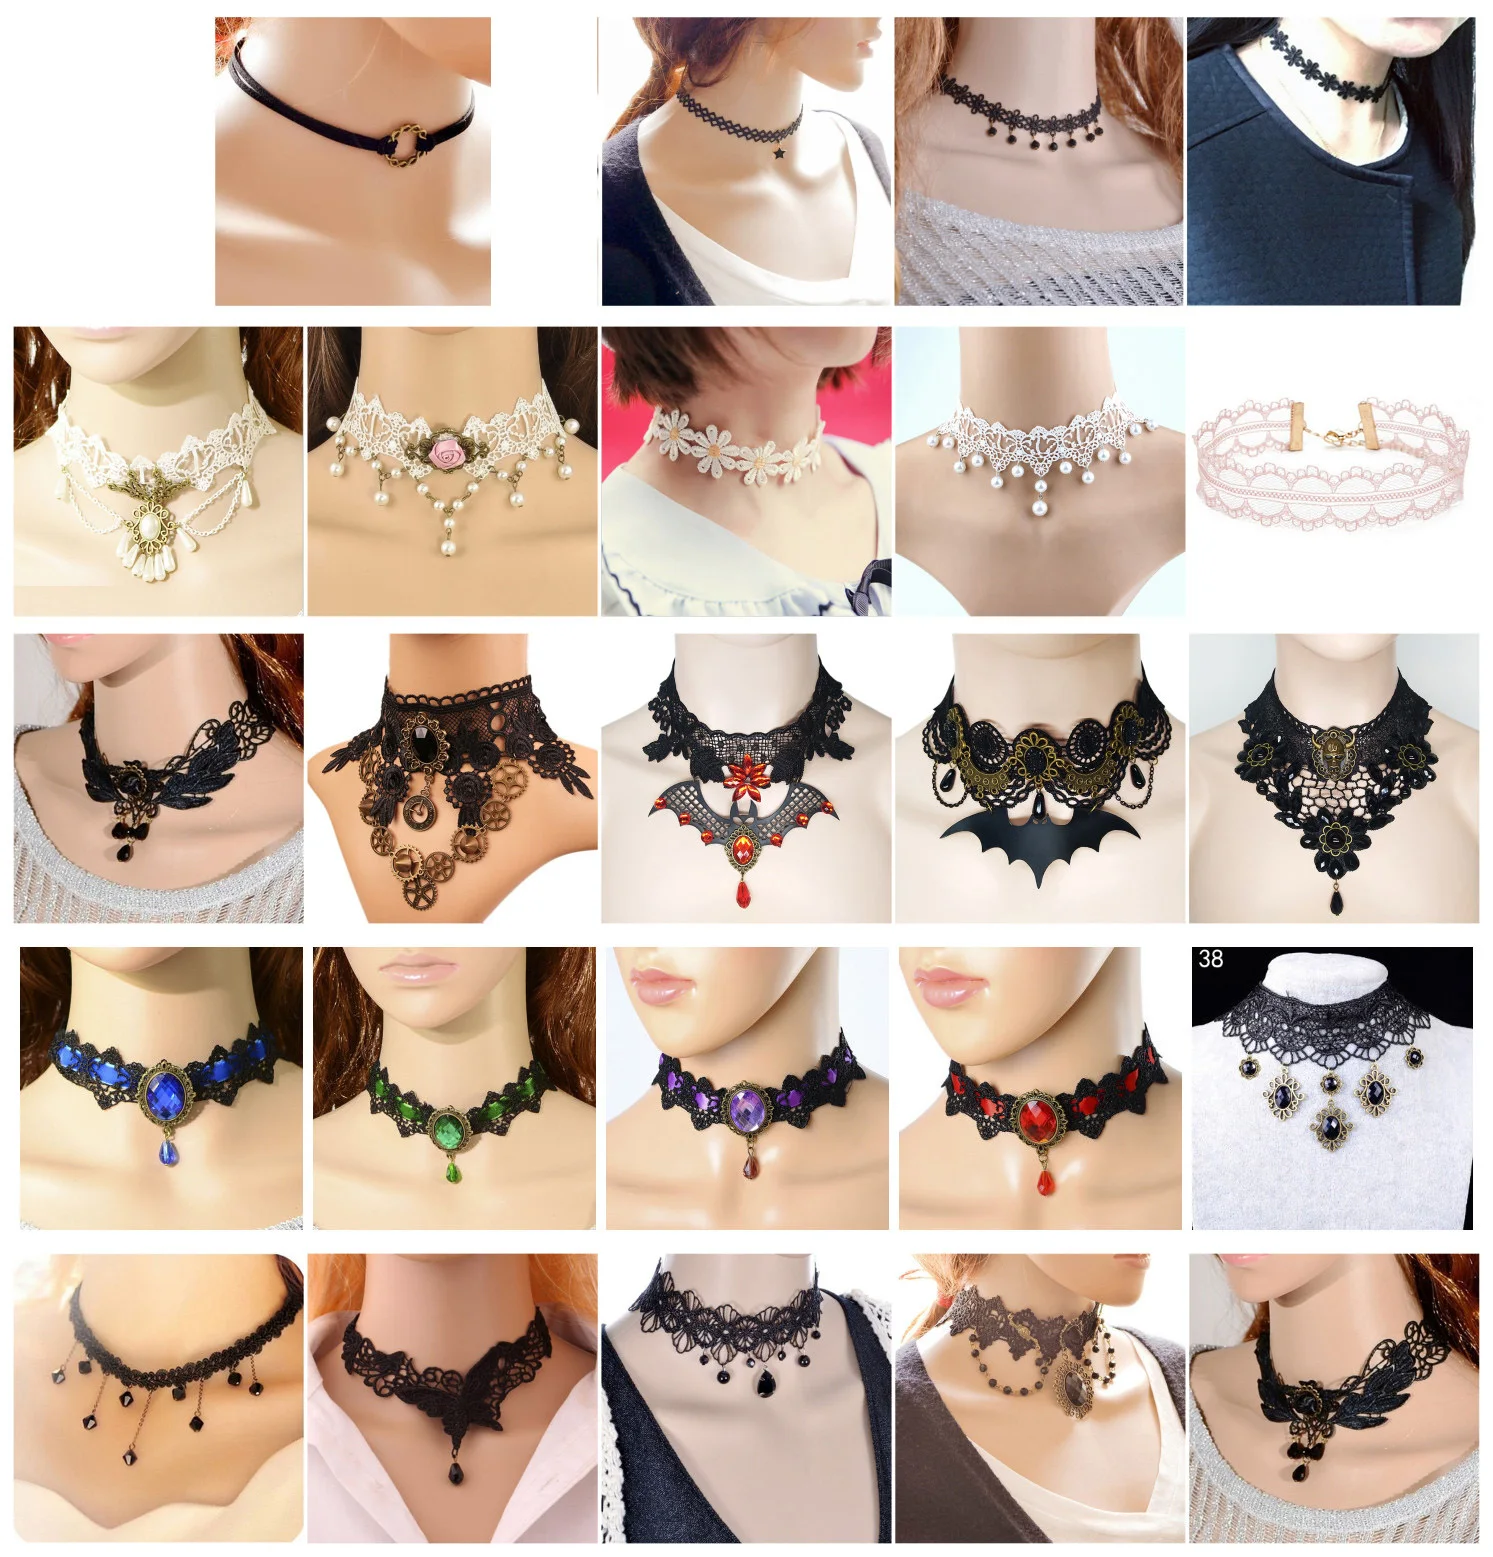 1 pcs Steampunk Gothic Victorian Tassel Tattoo Choker Necklace Black Lace Choker Collar Vintage Women Wedding Jewelry